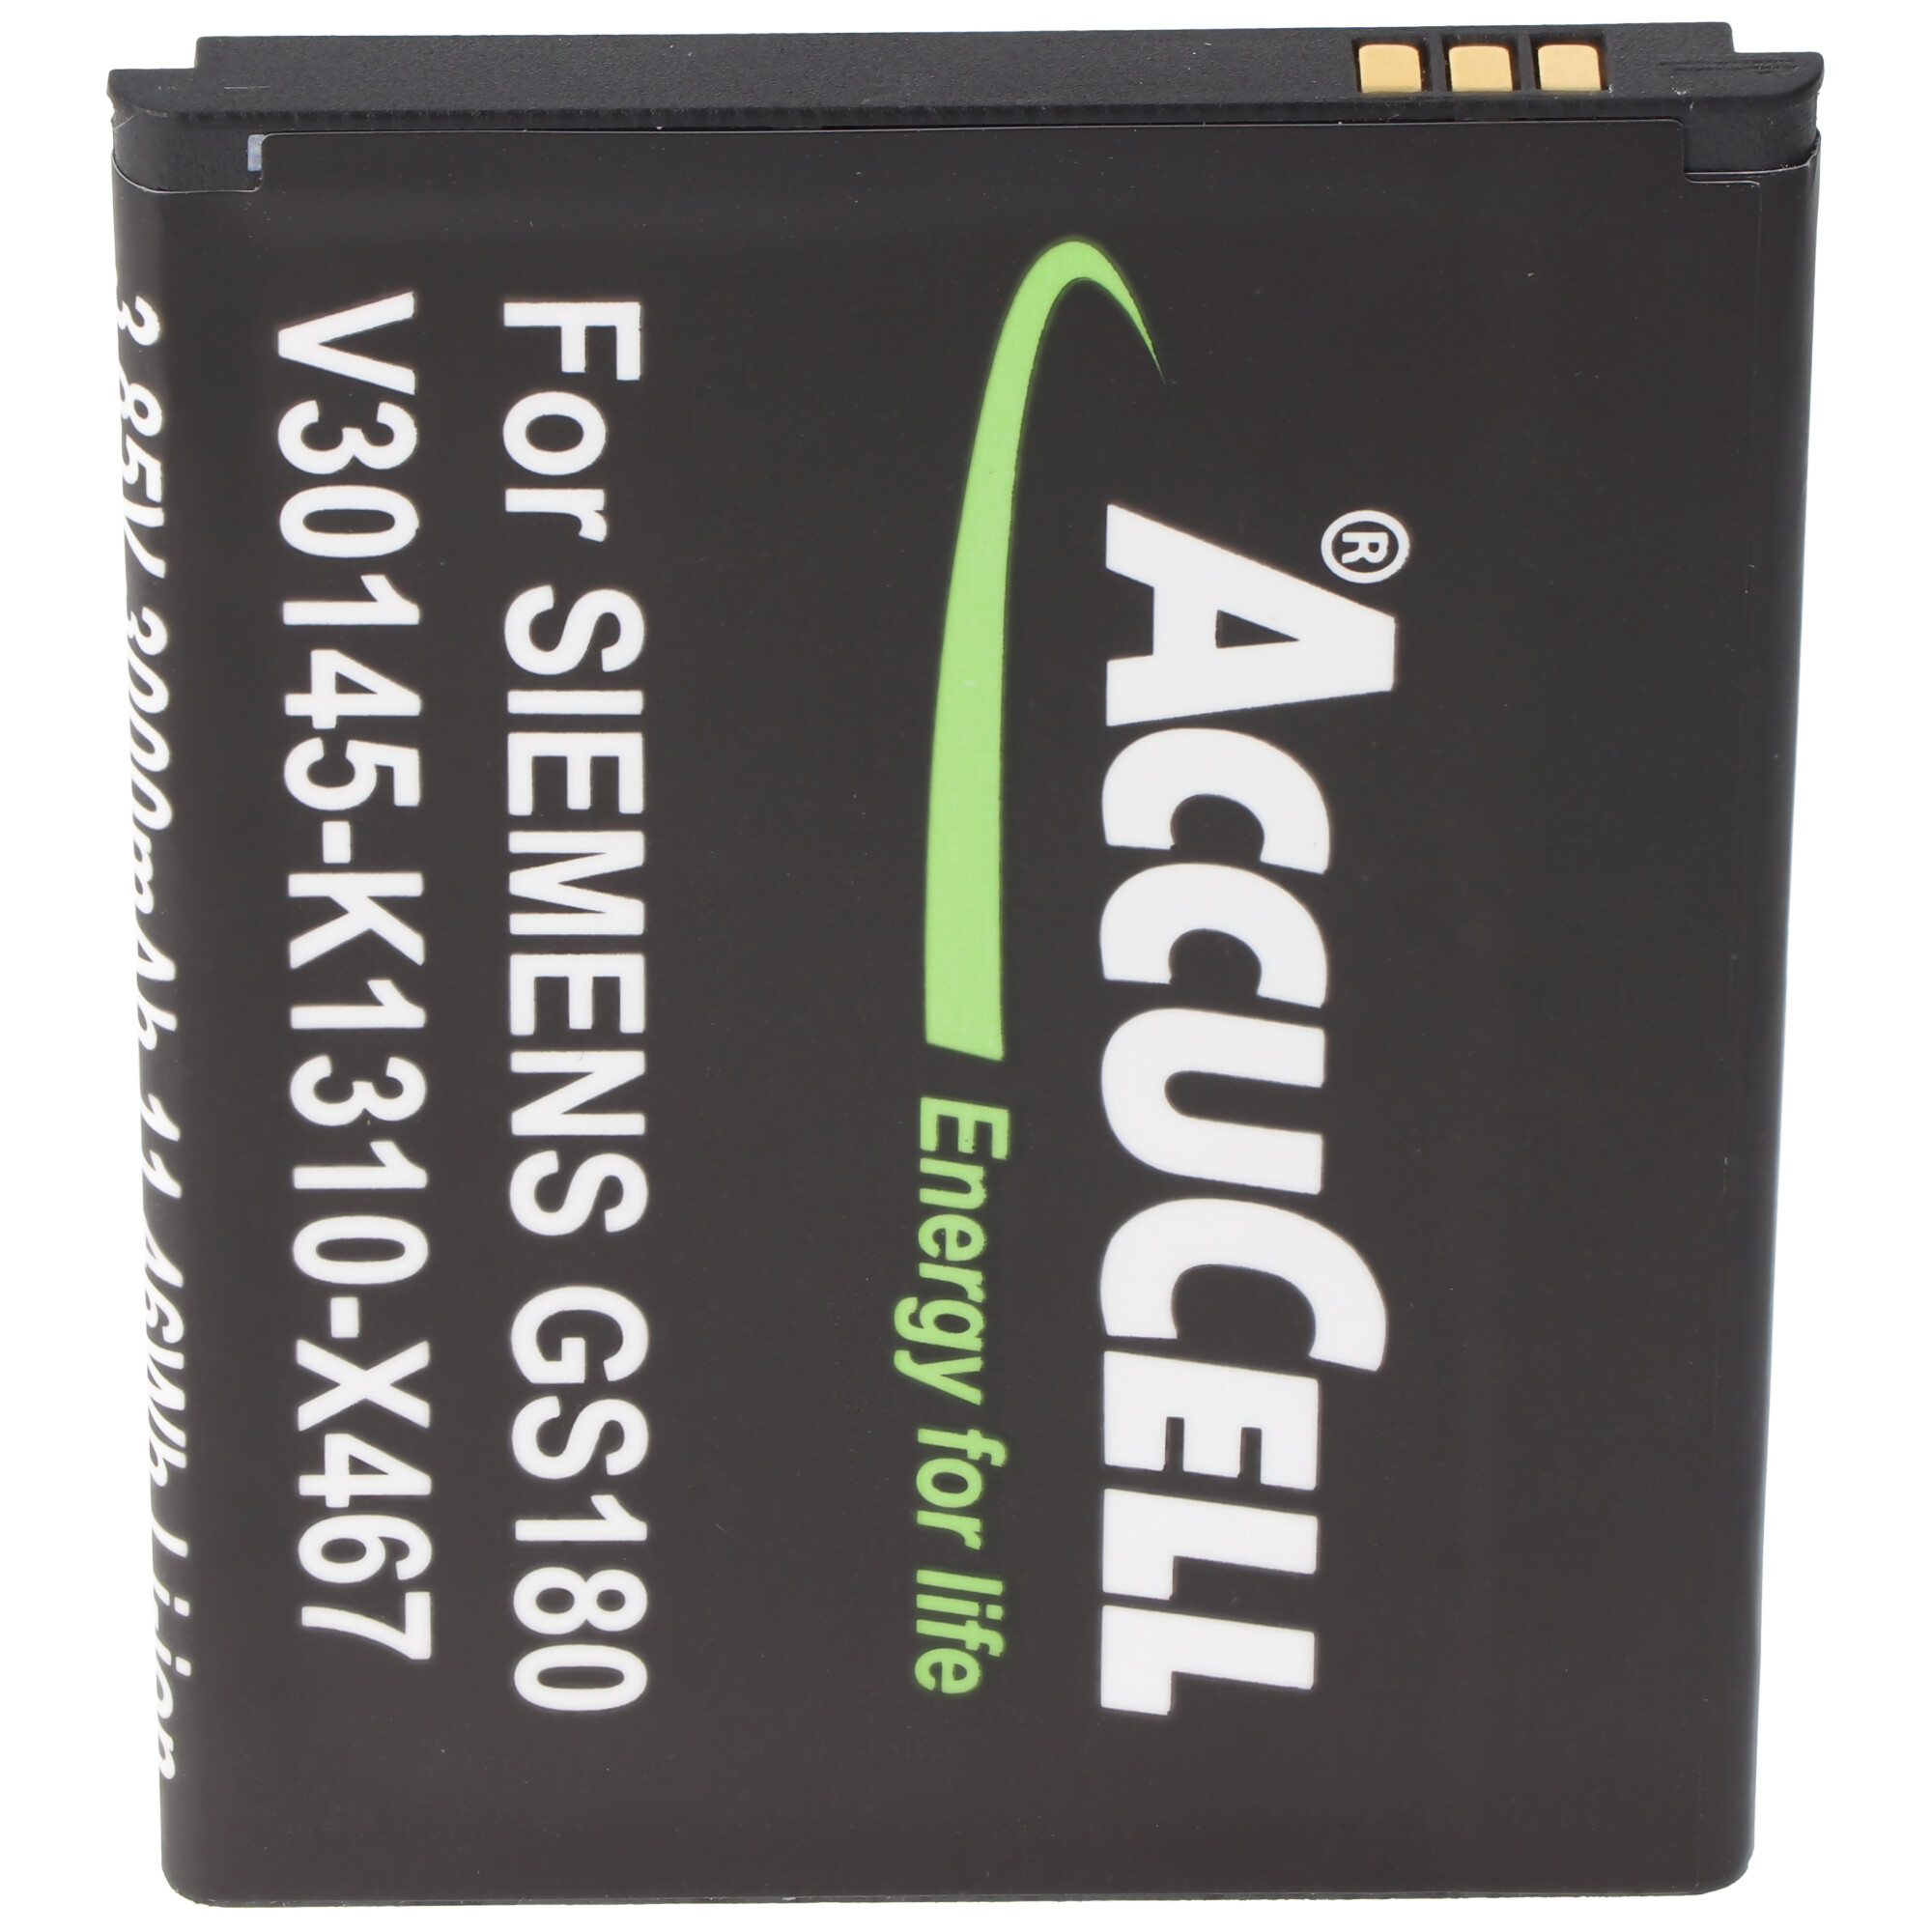 AccuCell Akku passend für Siemens Gigaset GS180 V30145-K1310-X467 3,85 Volt Akku mit 3000mAh Kapazität